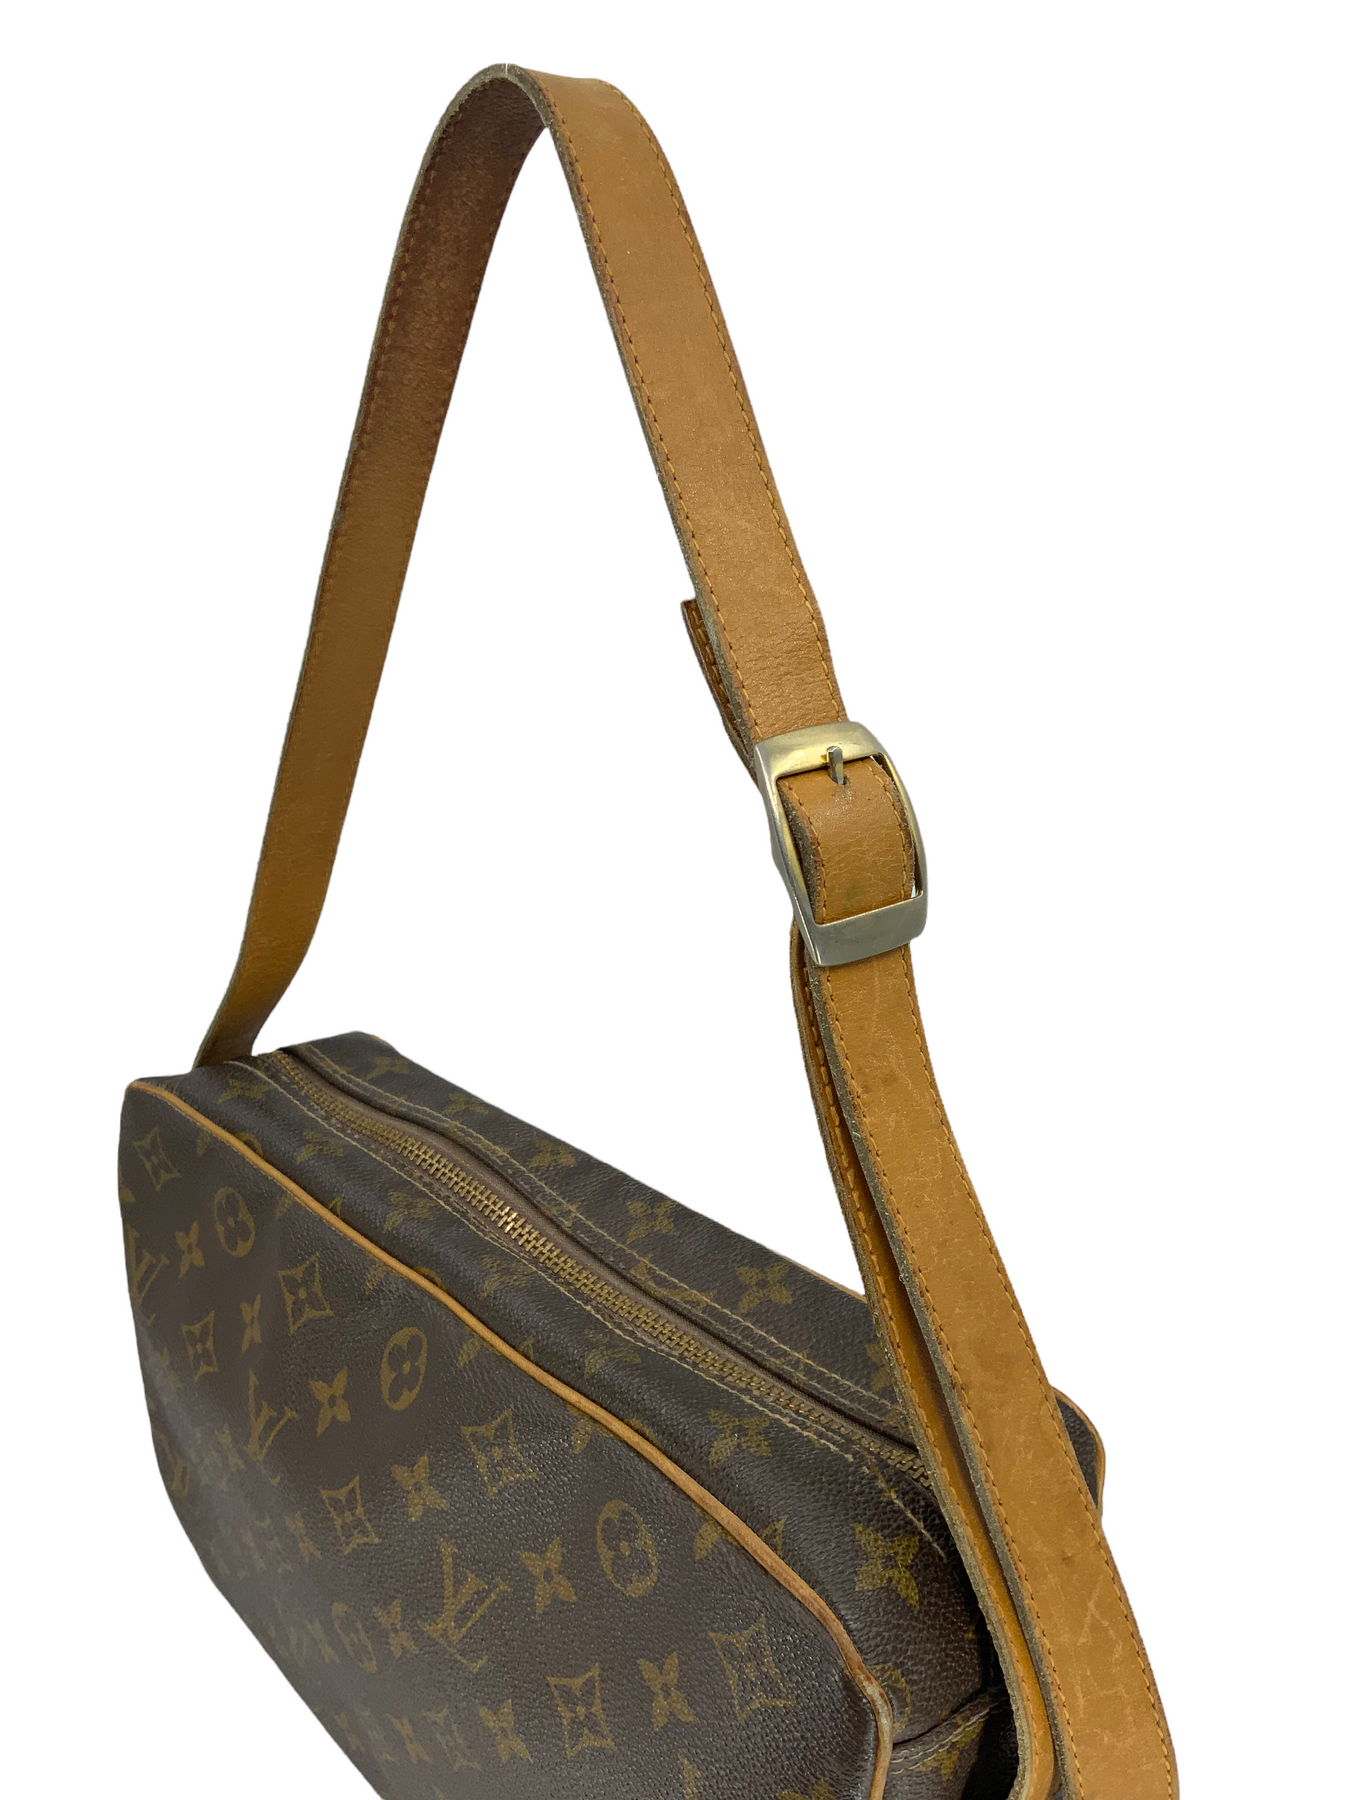 LOUIS VUITTON French Company Monogram Shoulder Bag 16230